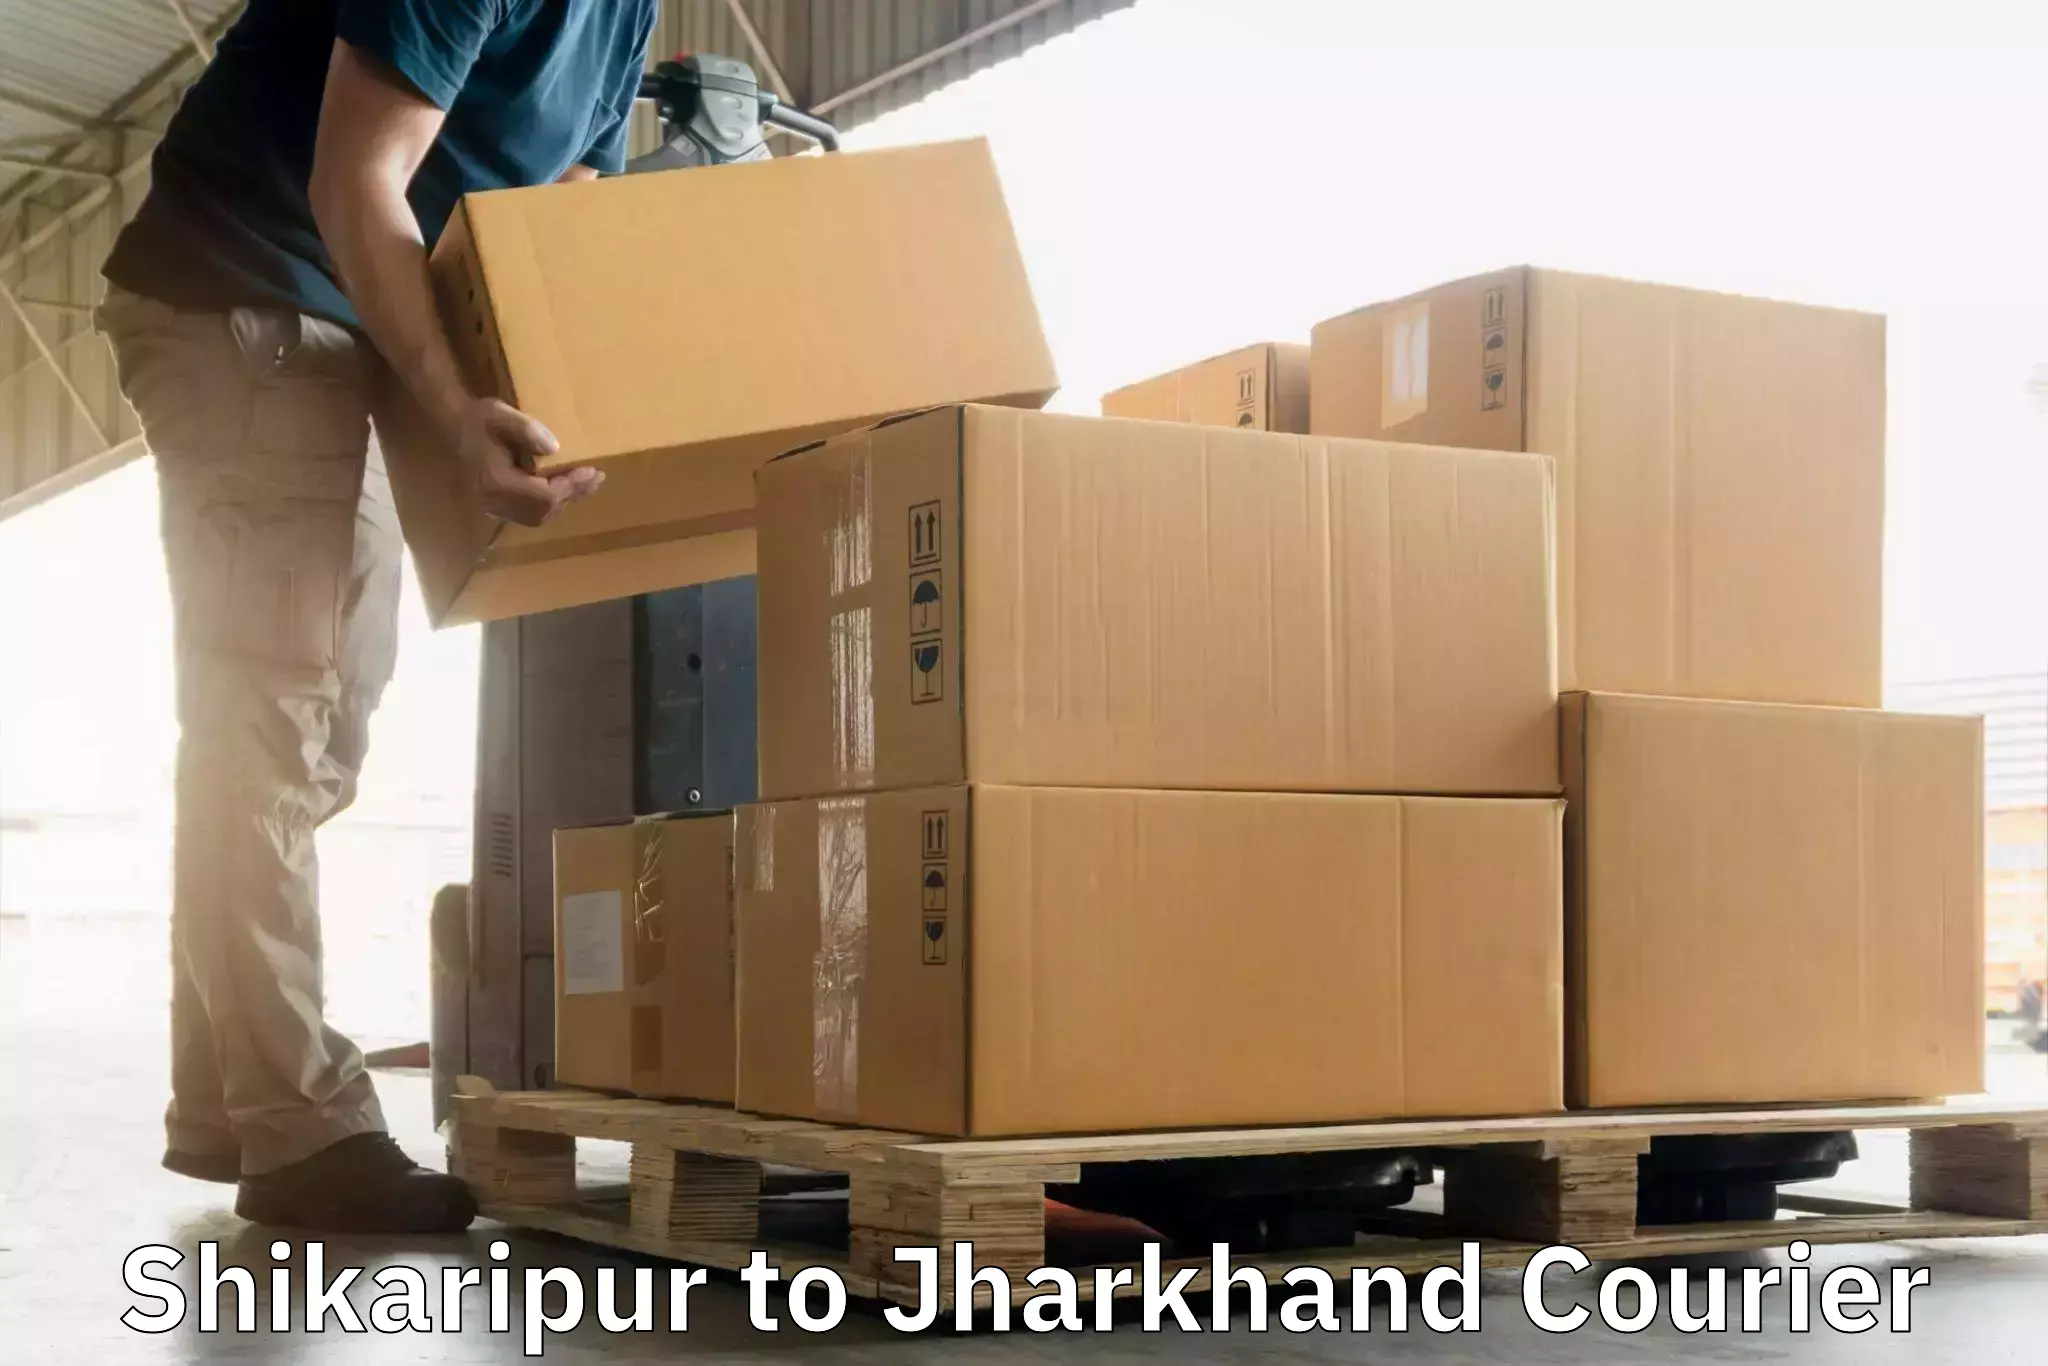 Enhanced tracking features Shikaripur to Ranchi